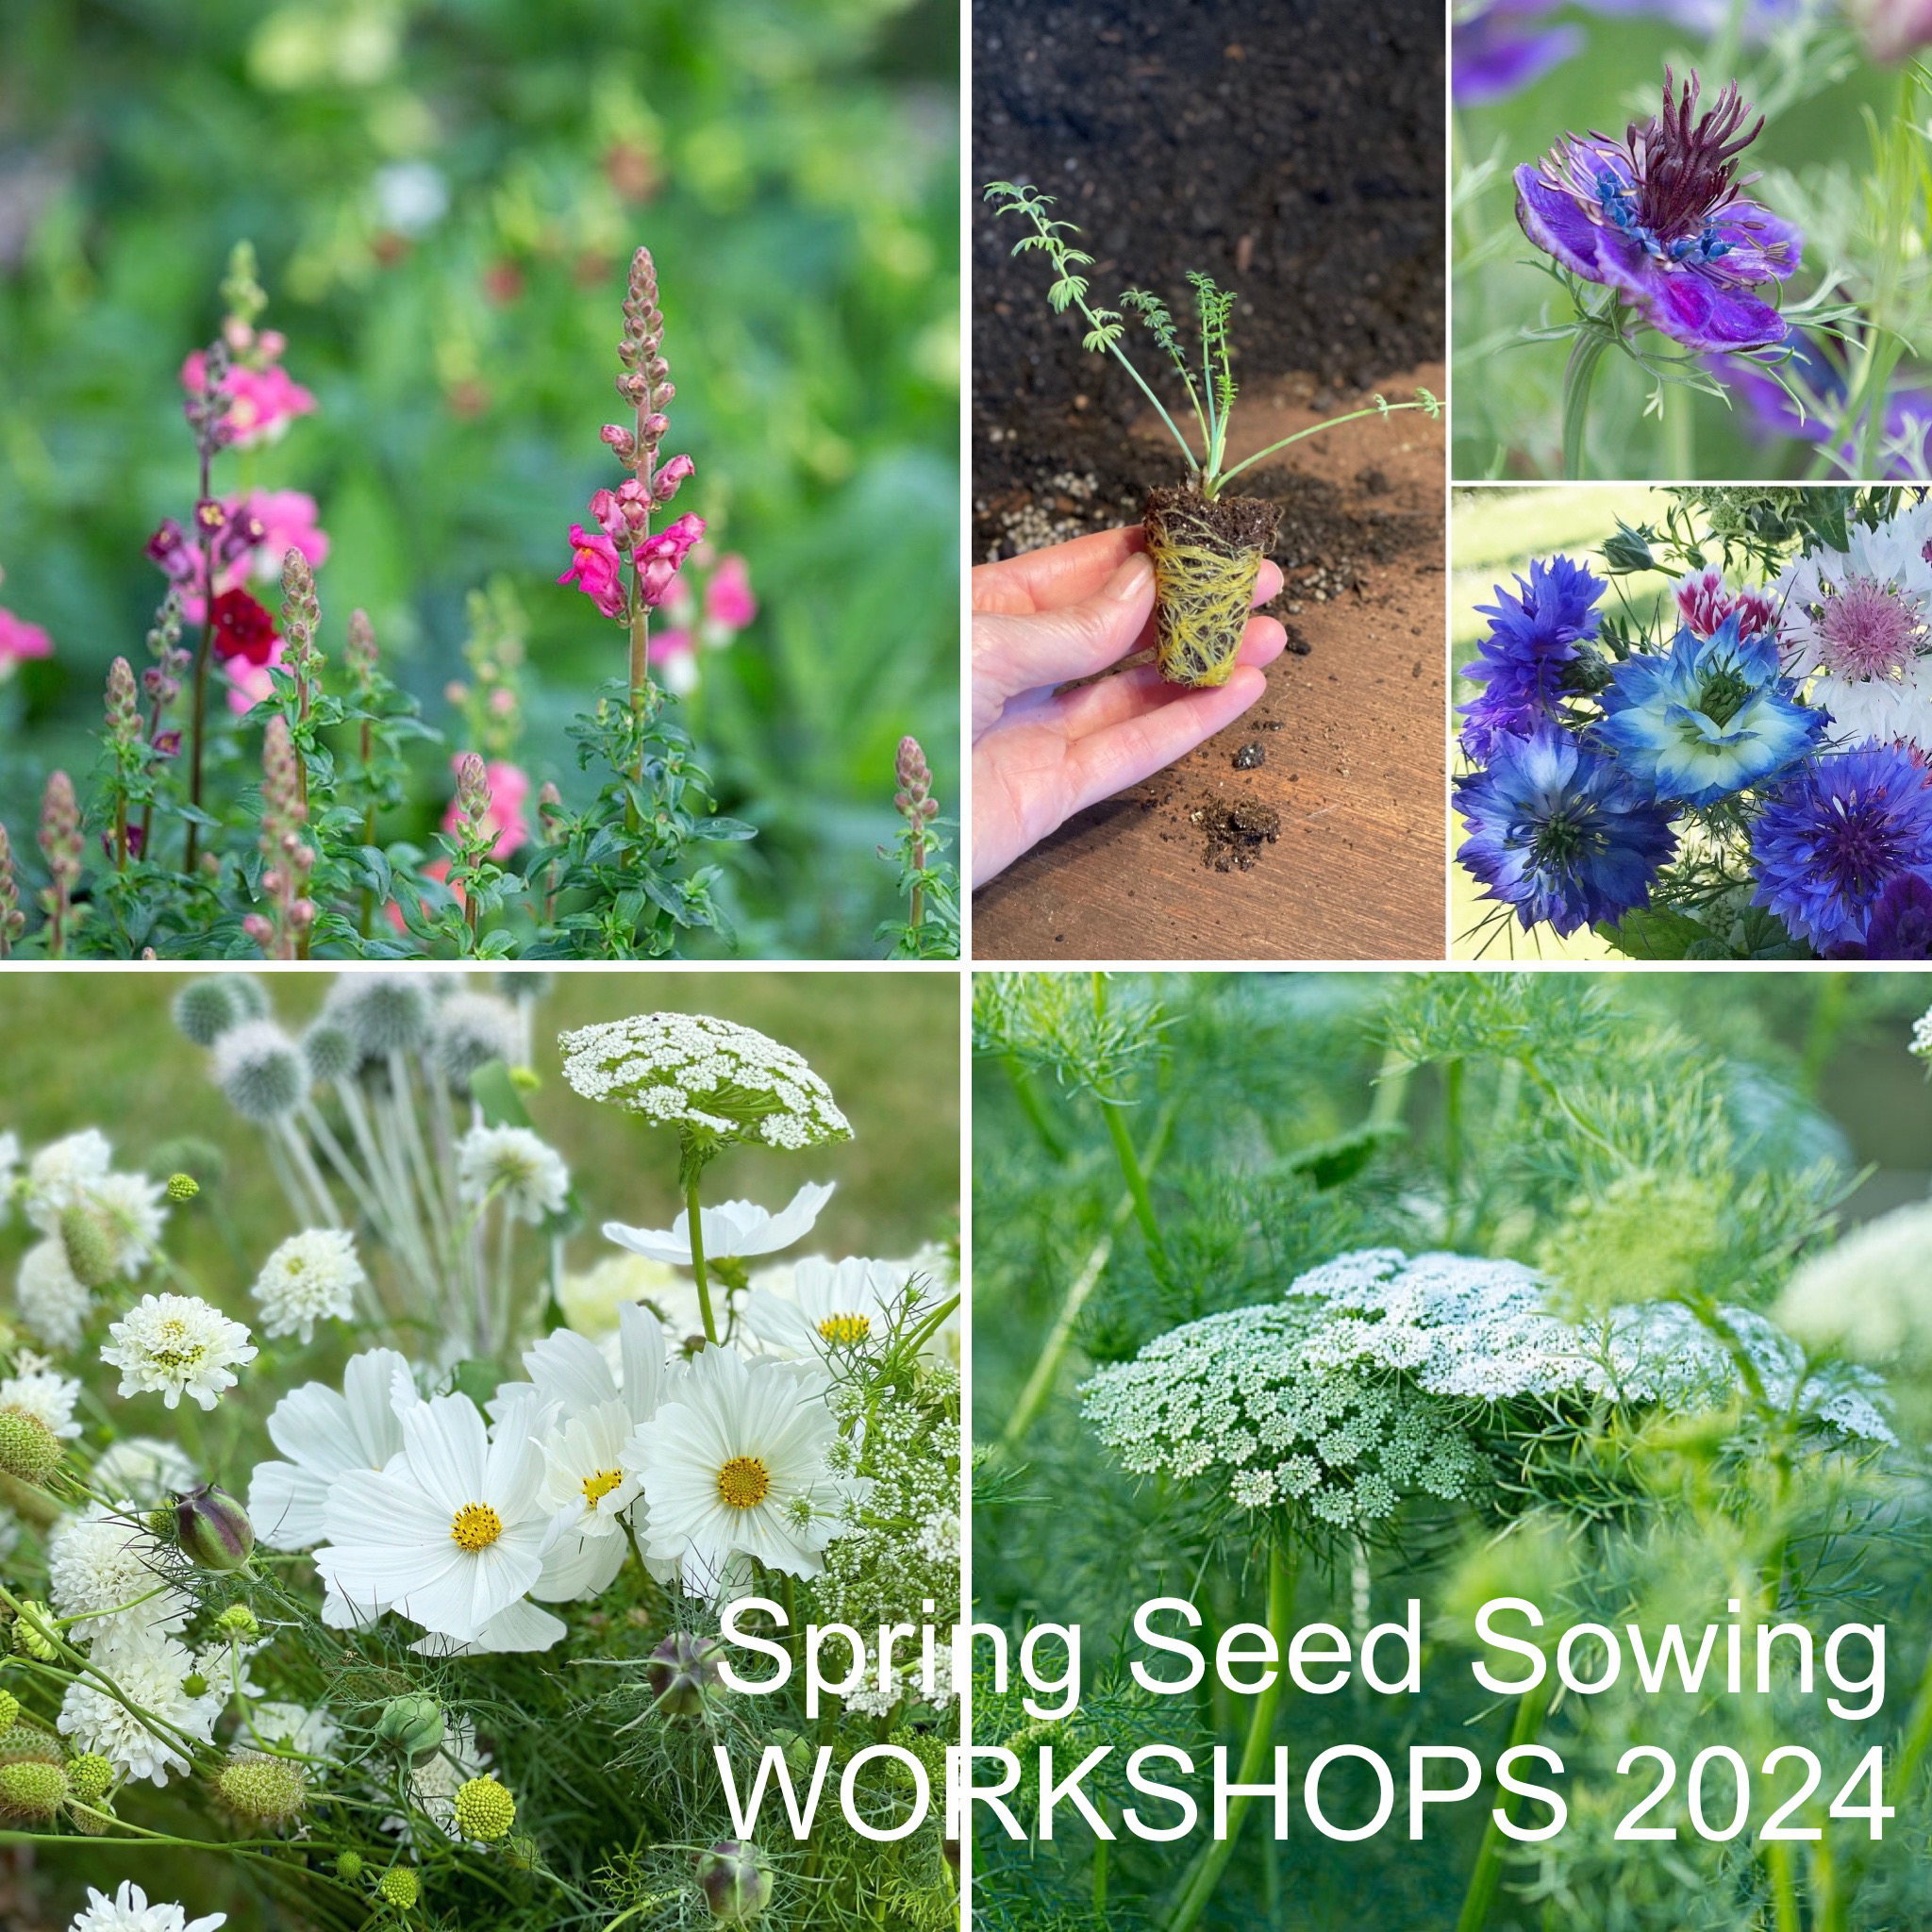 Chiltern Sky Flowers Seed Sowing Workshop